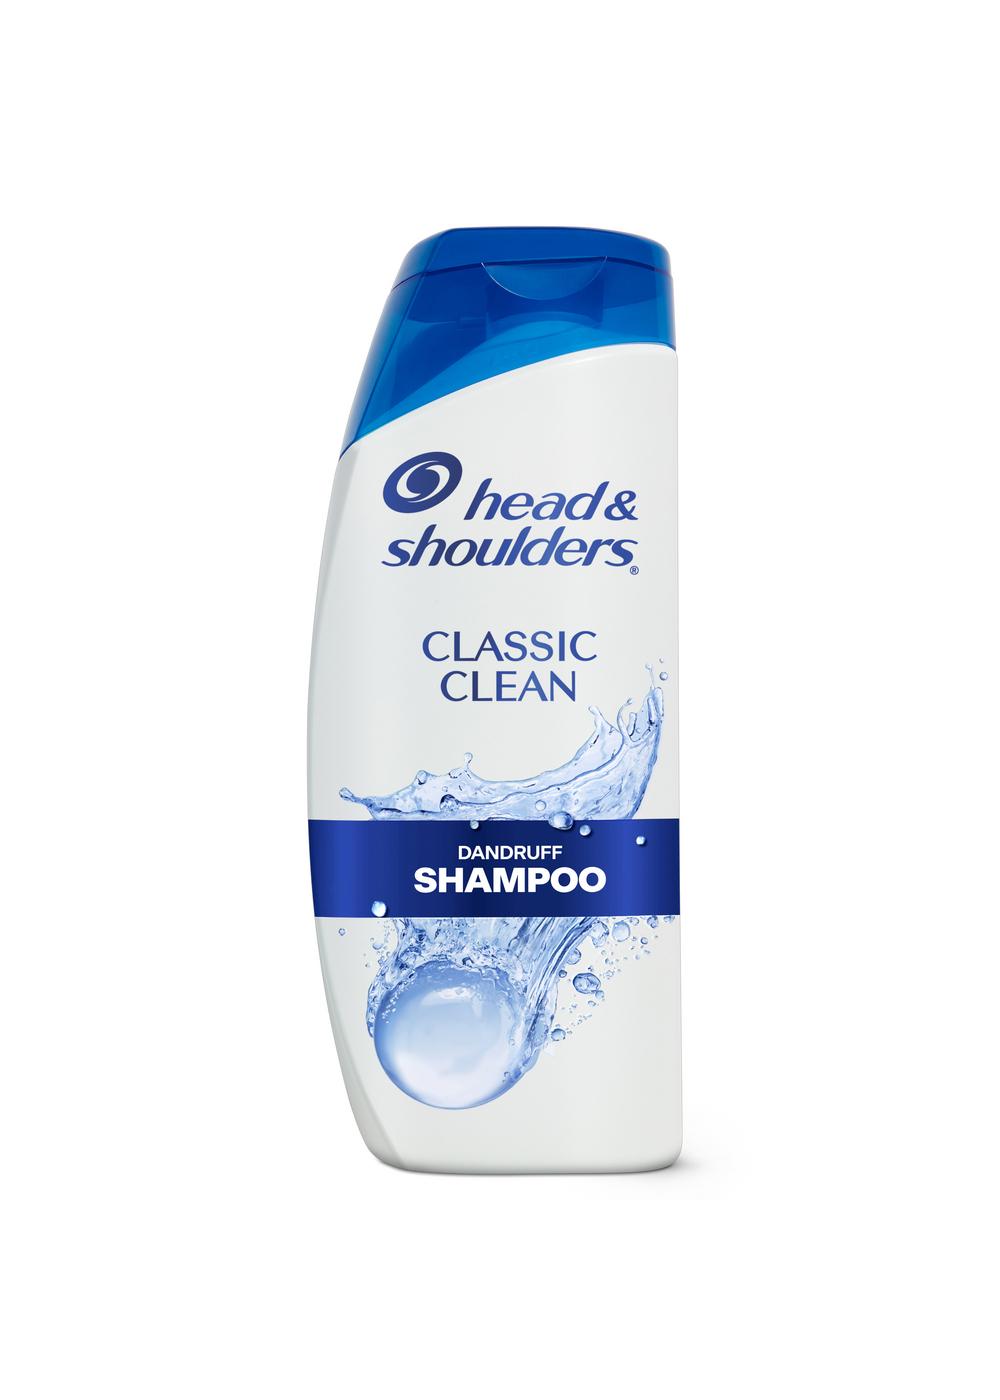 Head & Shoulders Dandruff Shampoo - Classic Clean; image 4 of 11